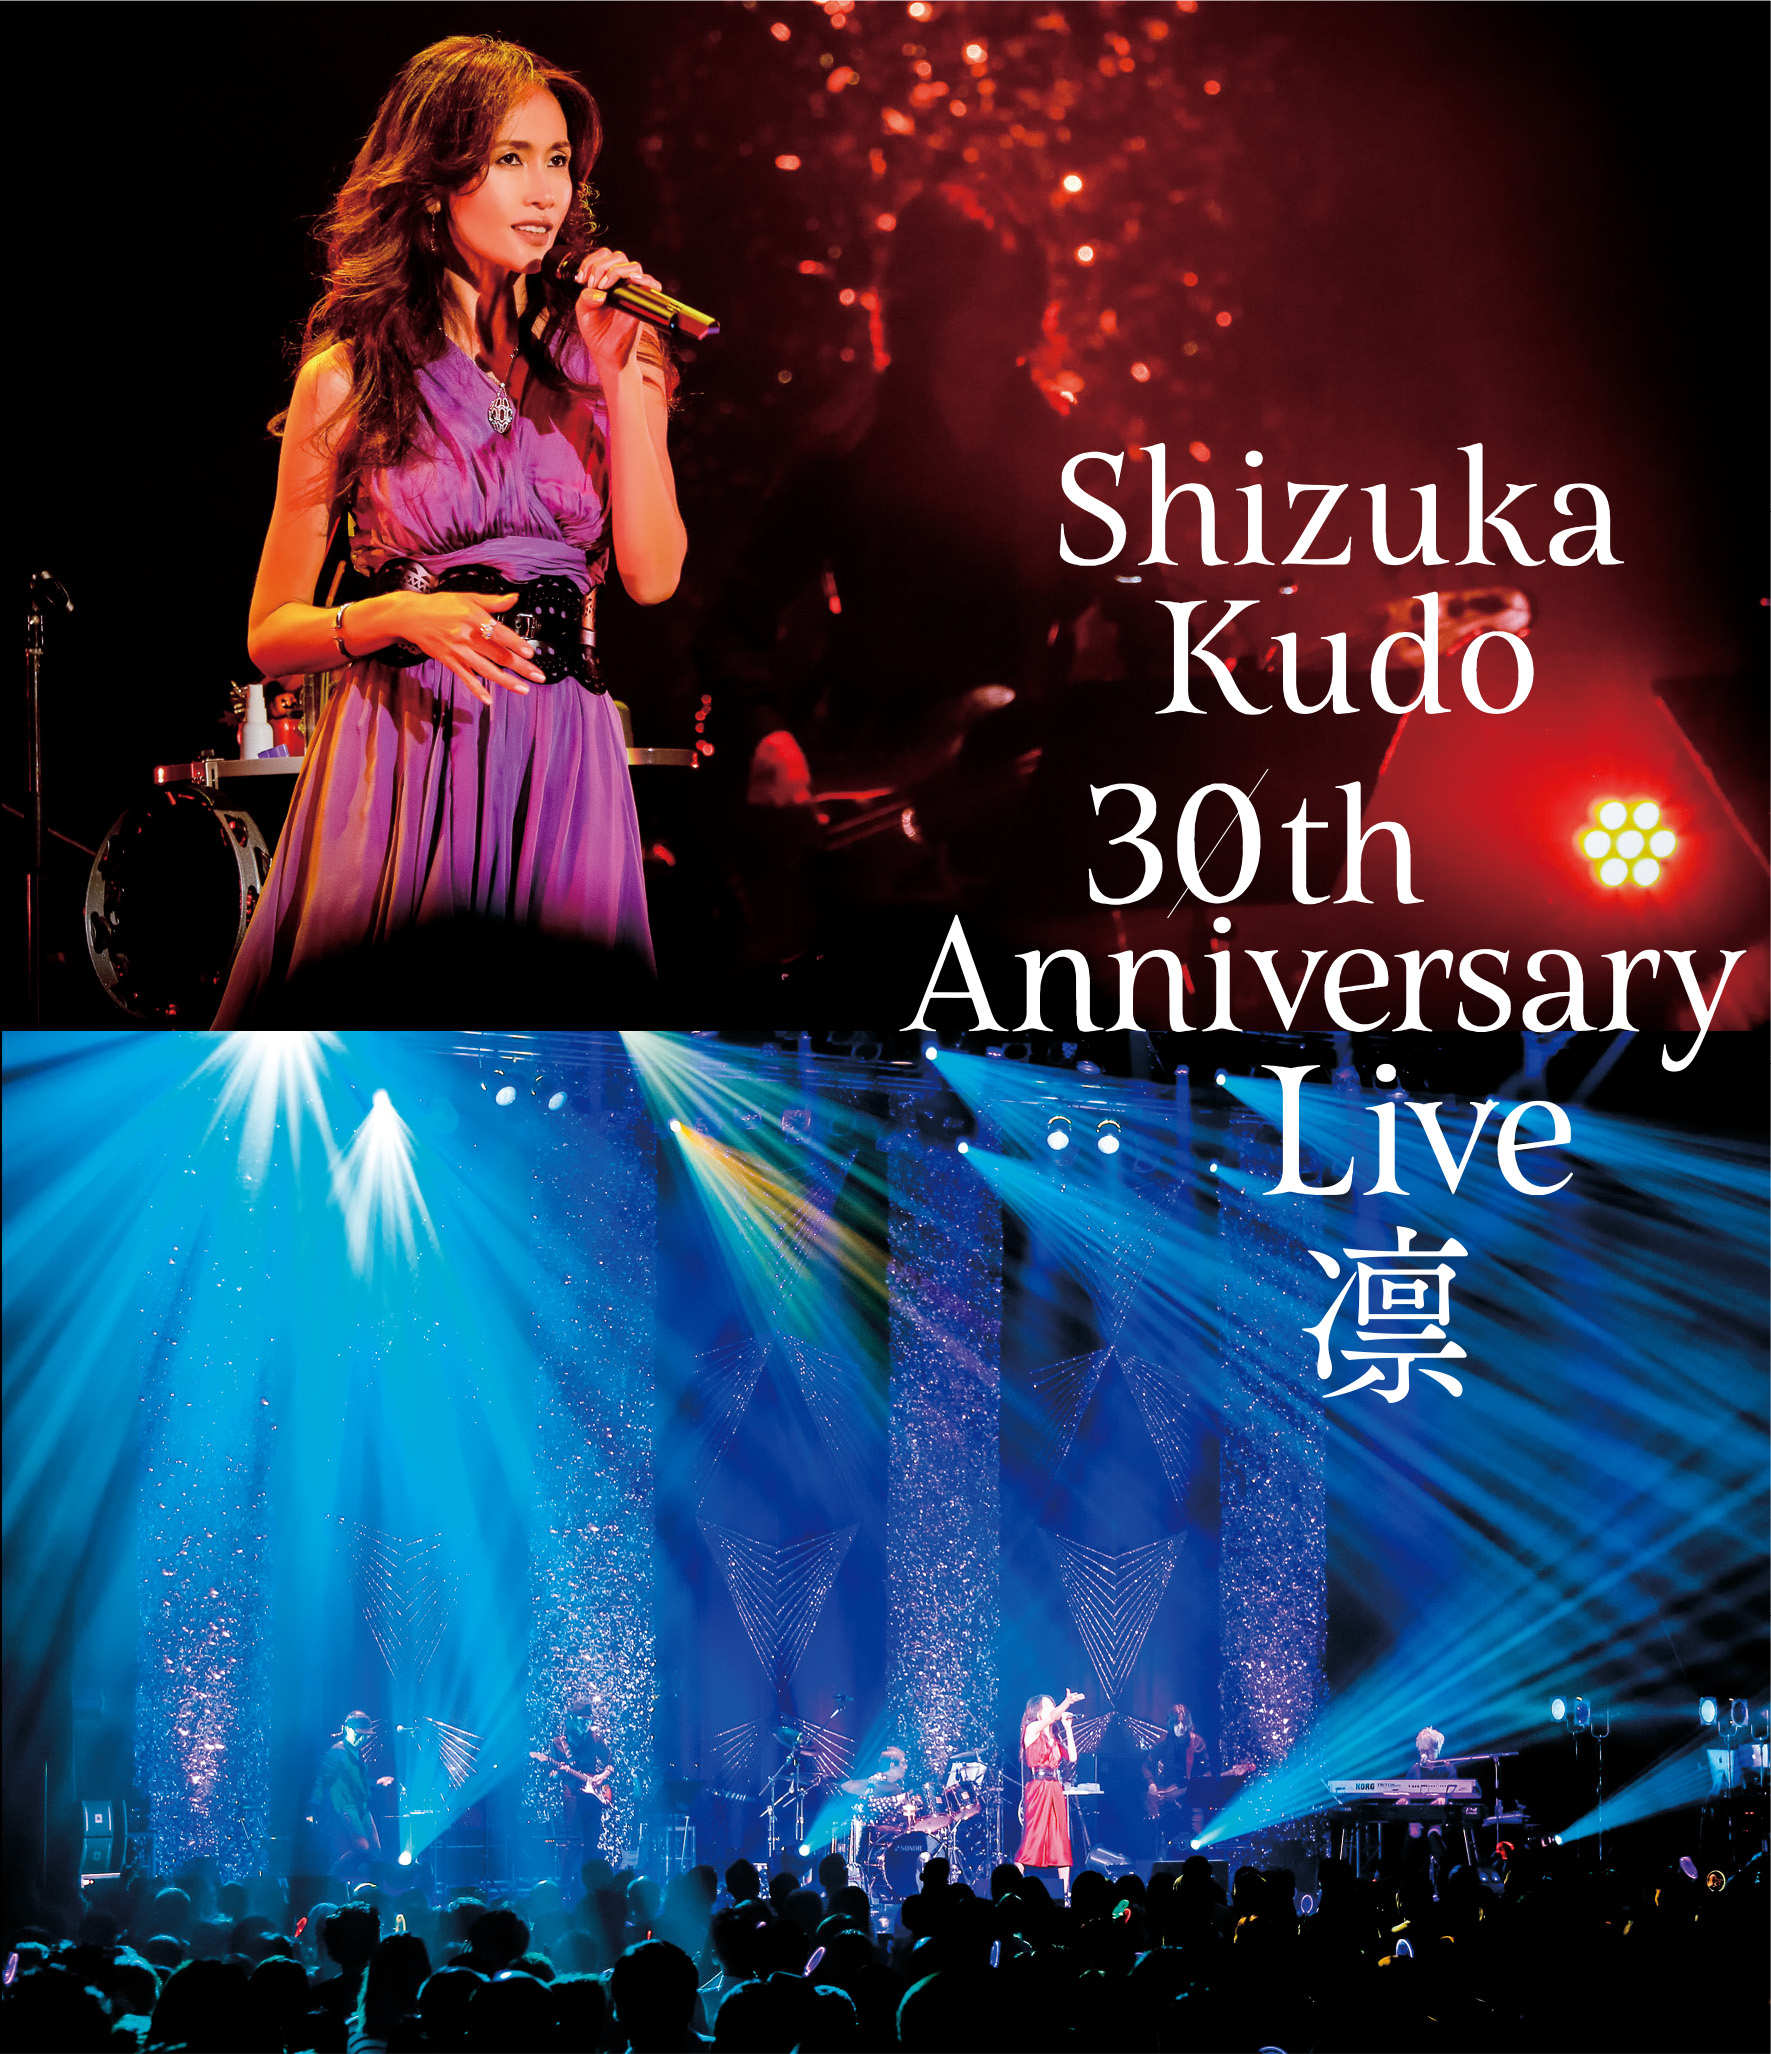 Kudo Shizuka 30th Anniversary Live "Rin" Normal Edition Blu-ray